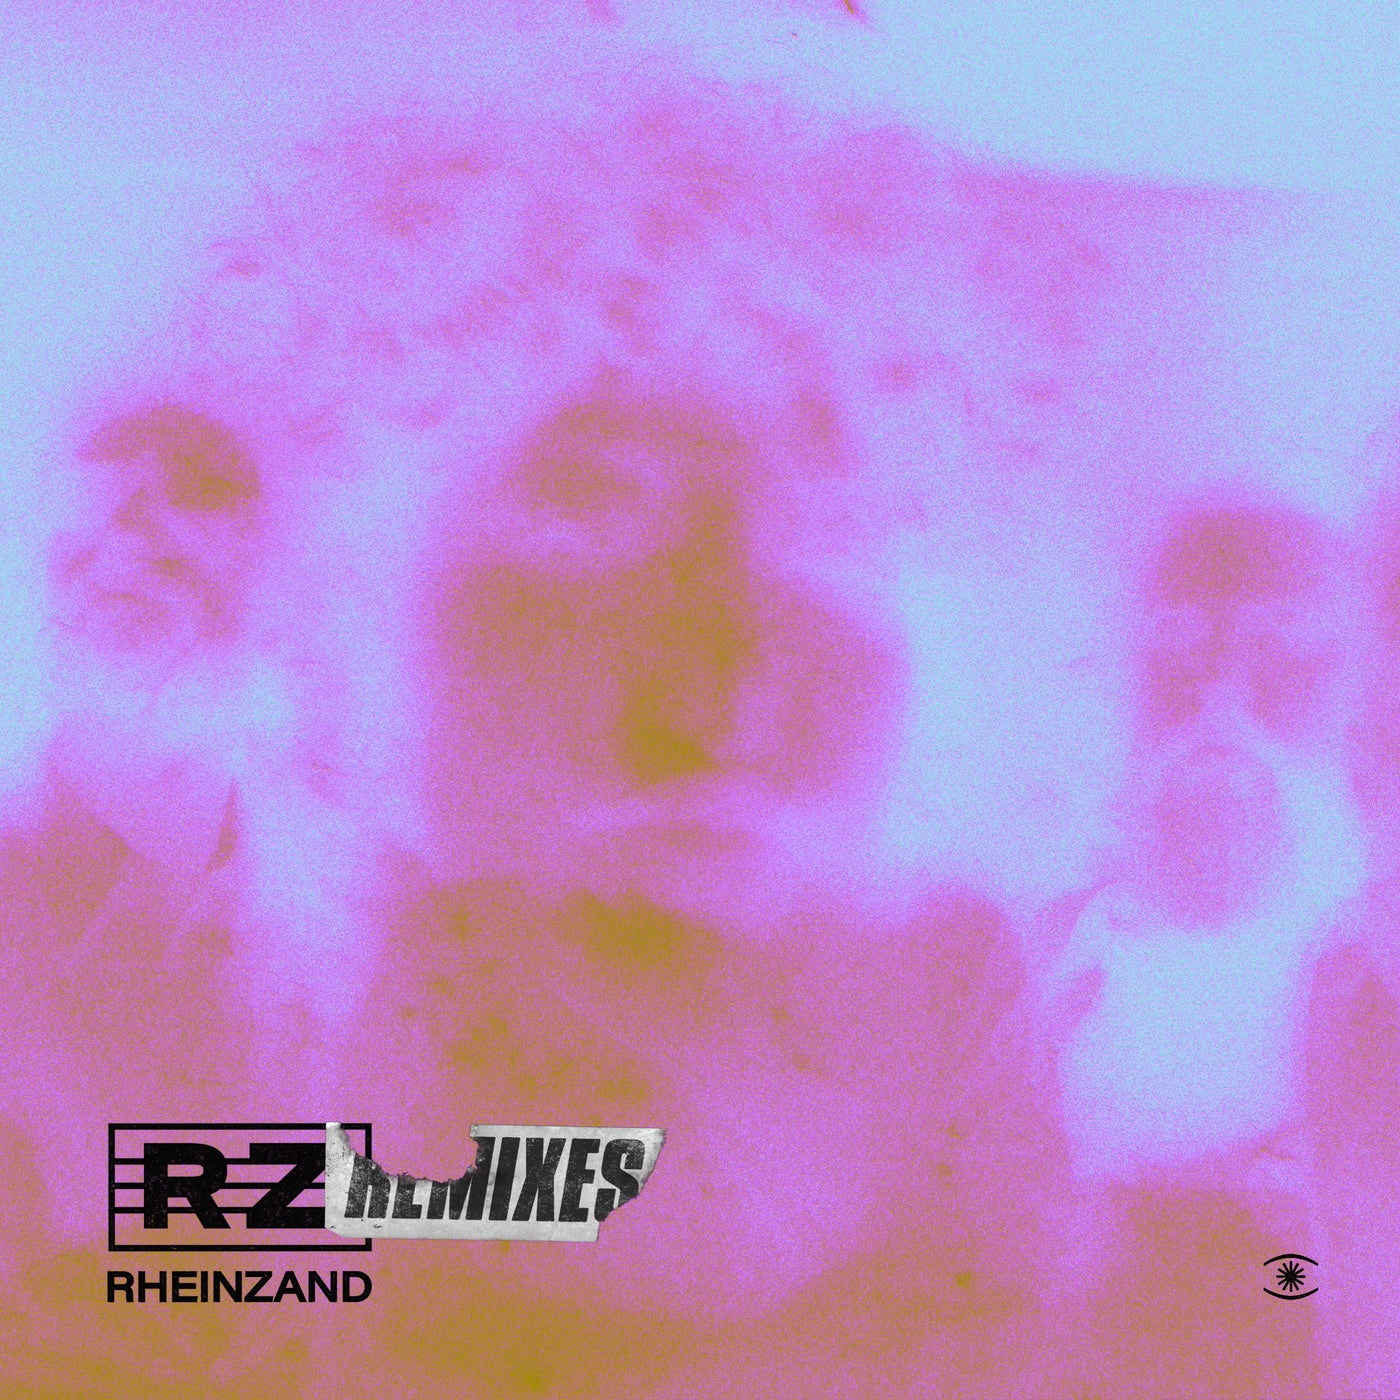 Rheinzand – Rheinzand Remixes (Deluxe) [ZZZCD 0277]